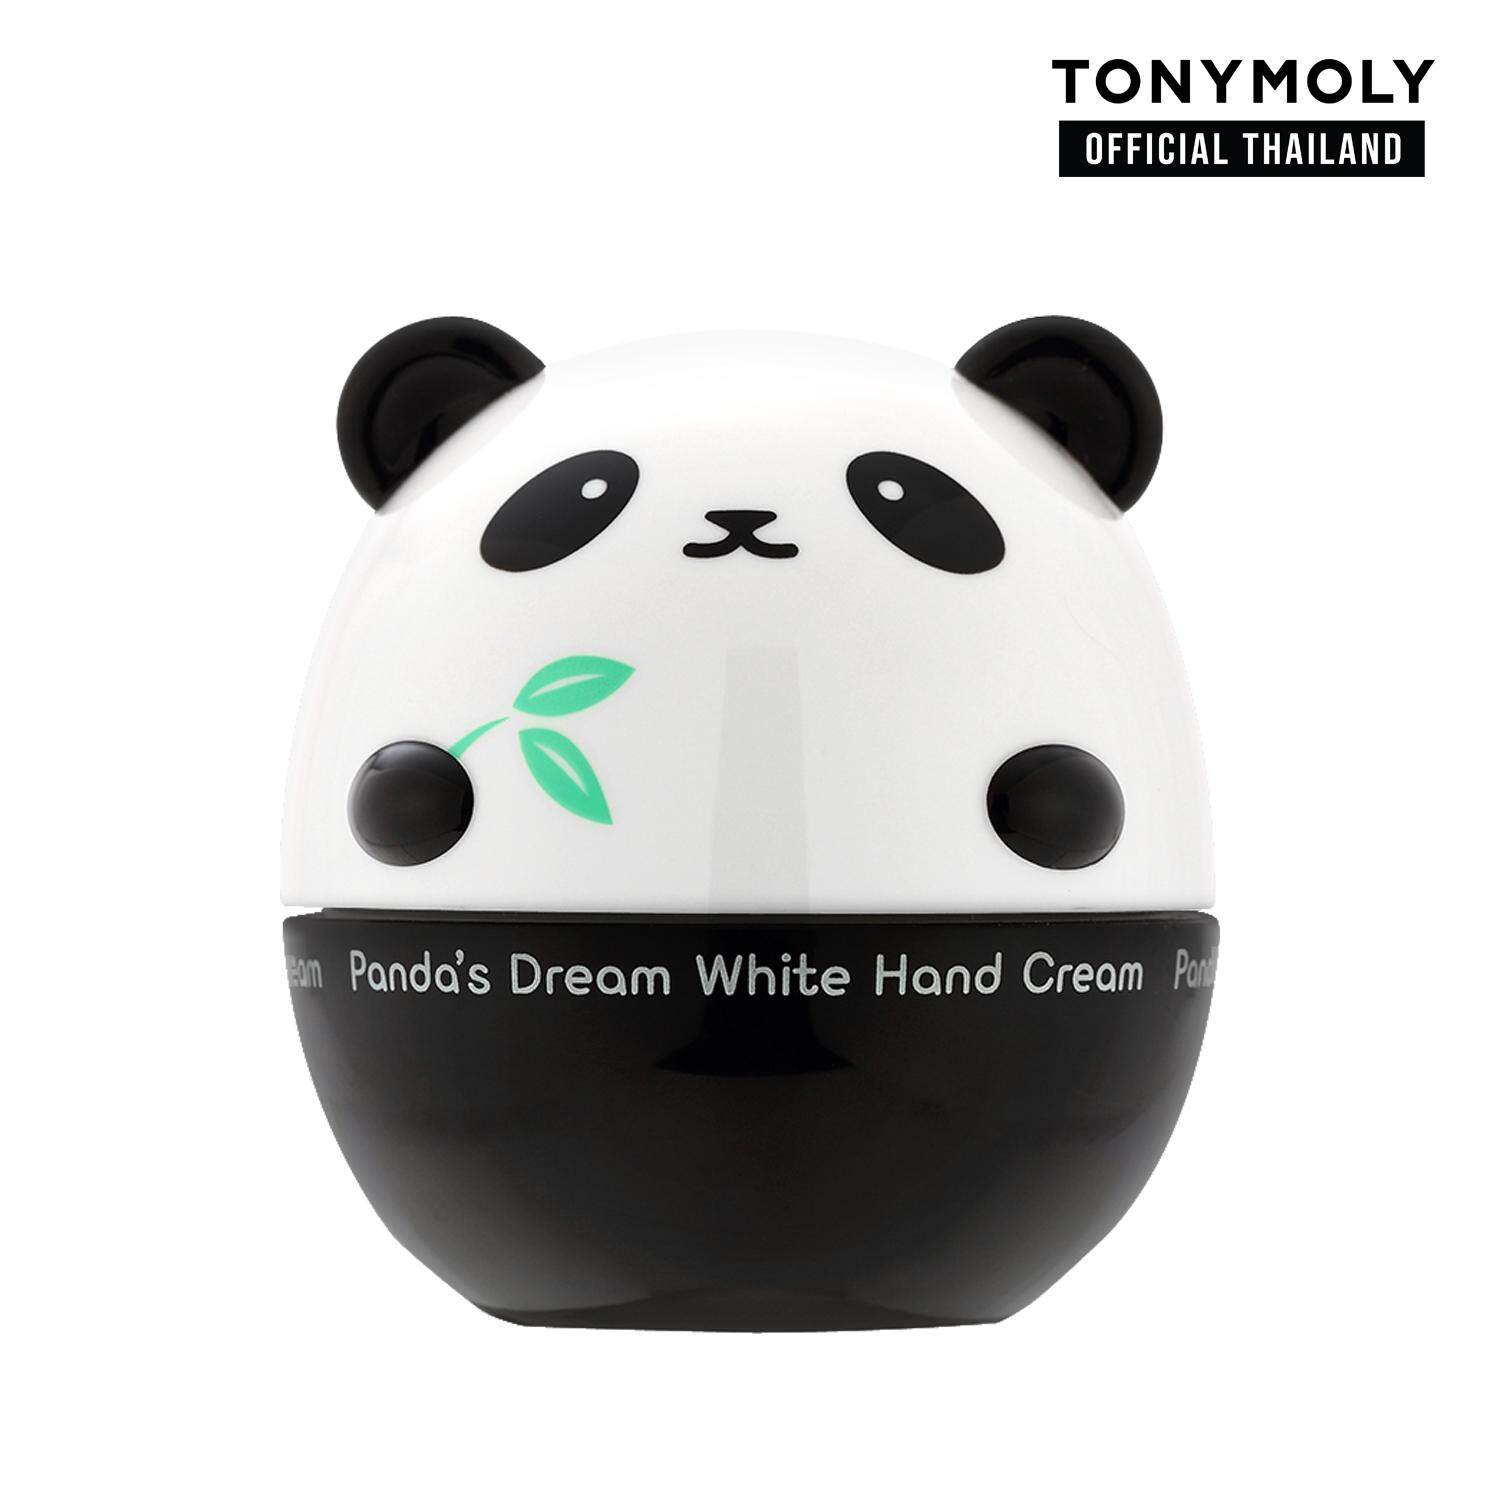 [ EXP : 03/2022 ] TONYMOLY PANDAS DREAM WHITE HAND CREAM